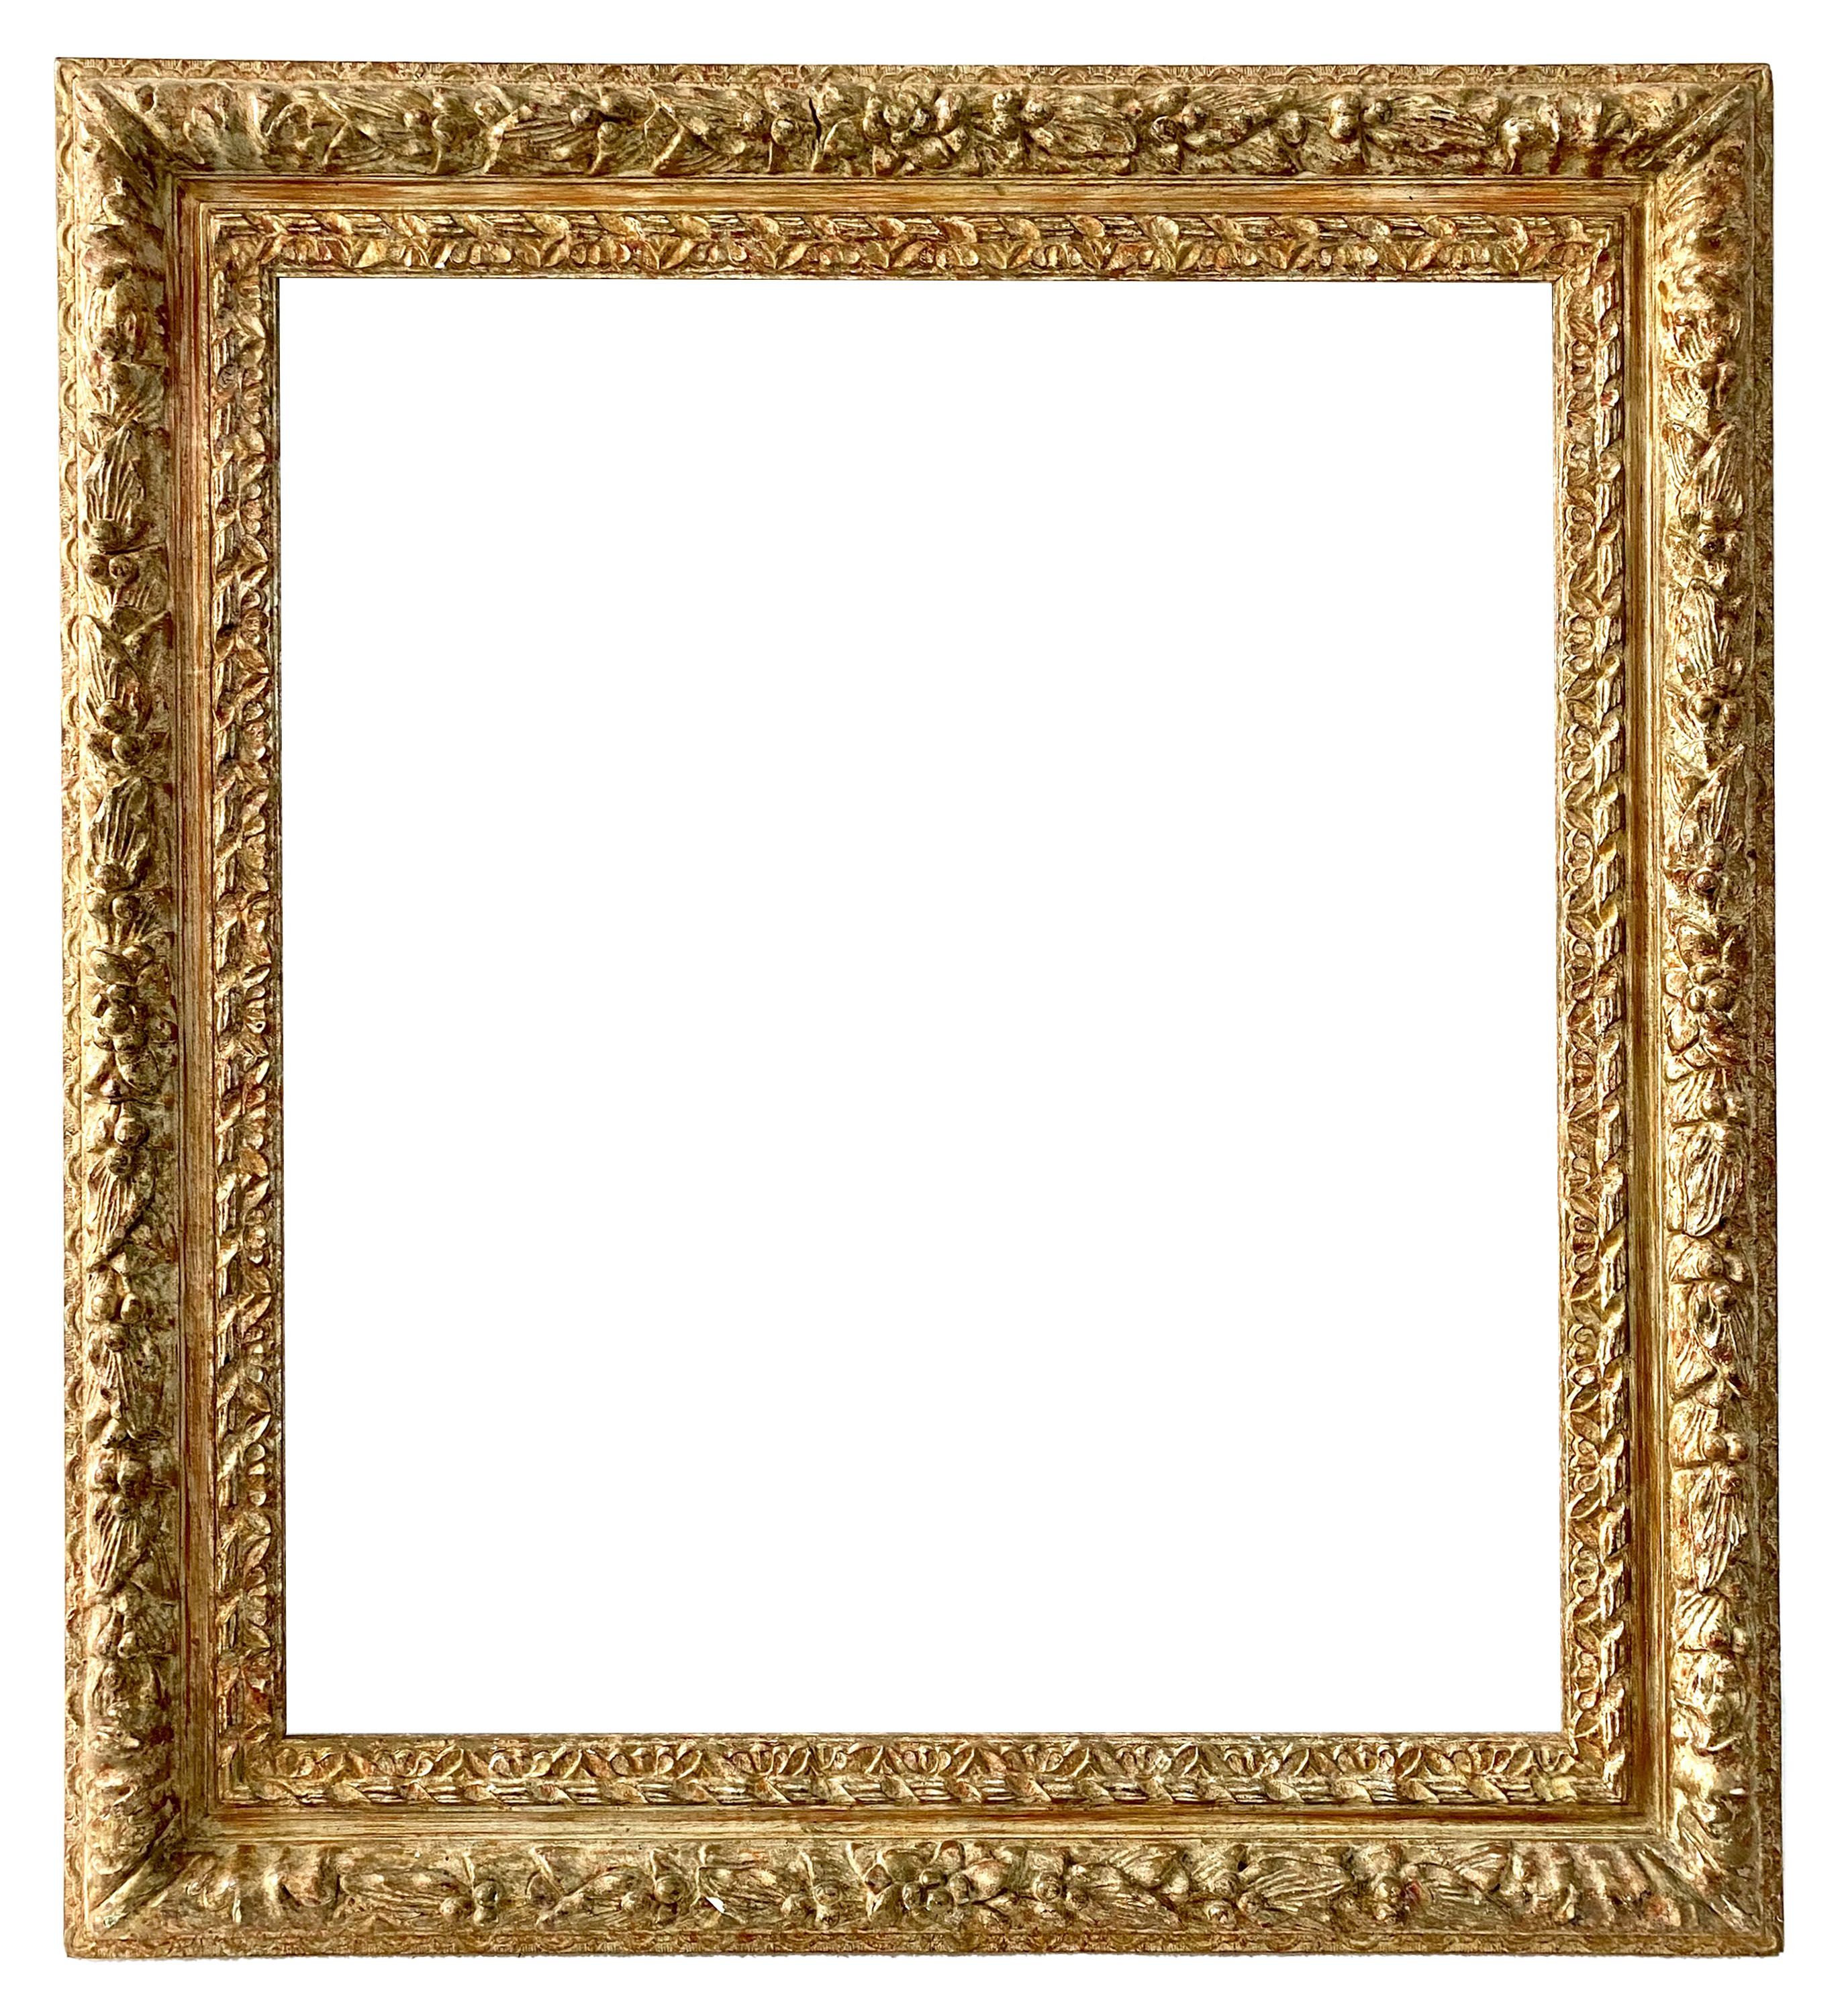 Cadre de style Louis XIII - 57,70 x 49,80 - REF - 1439